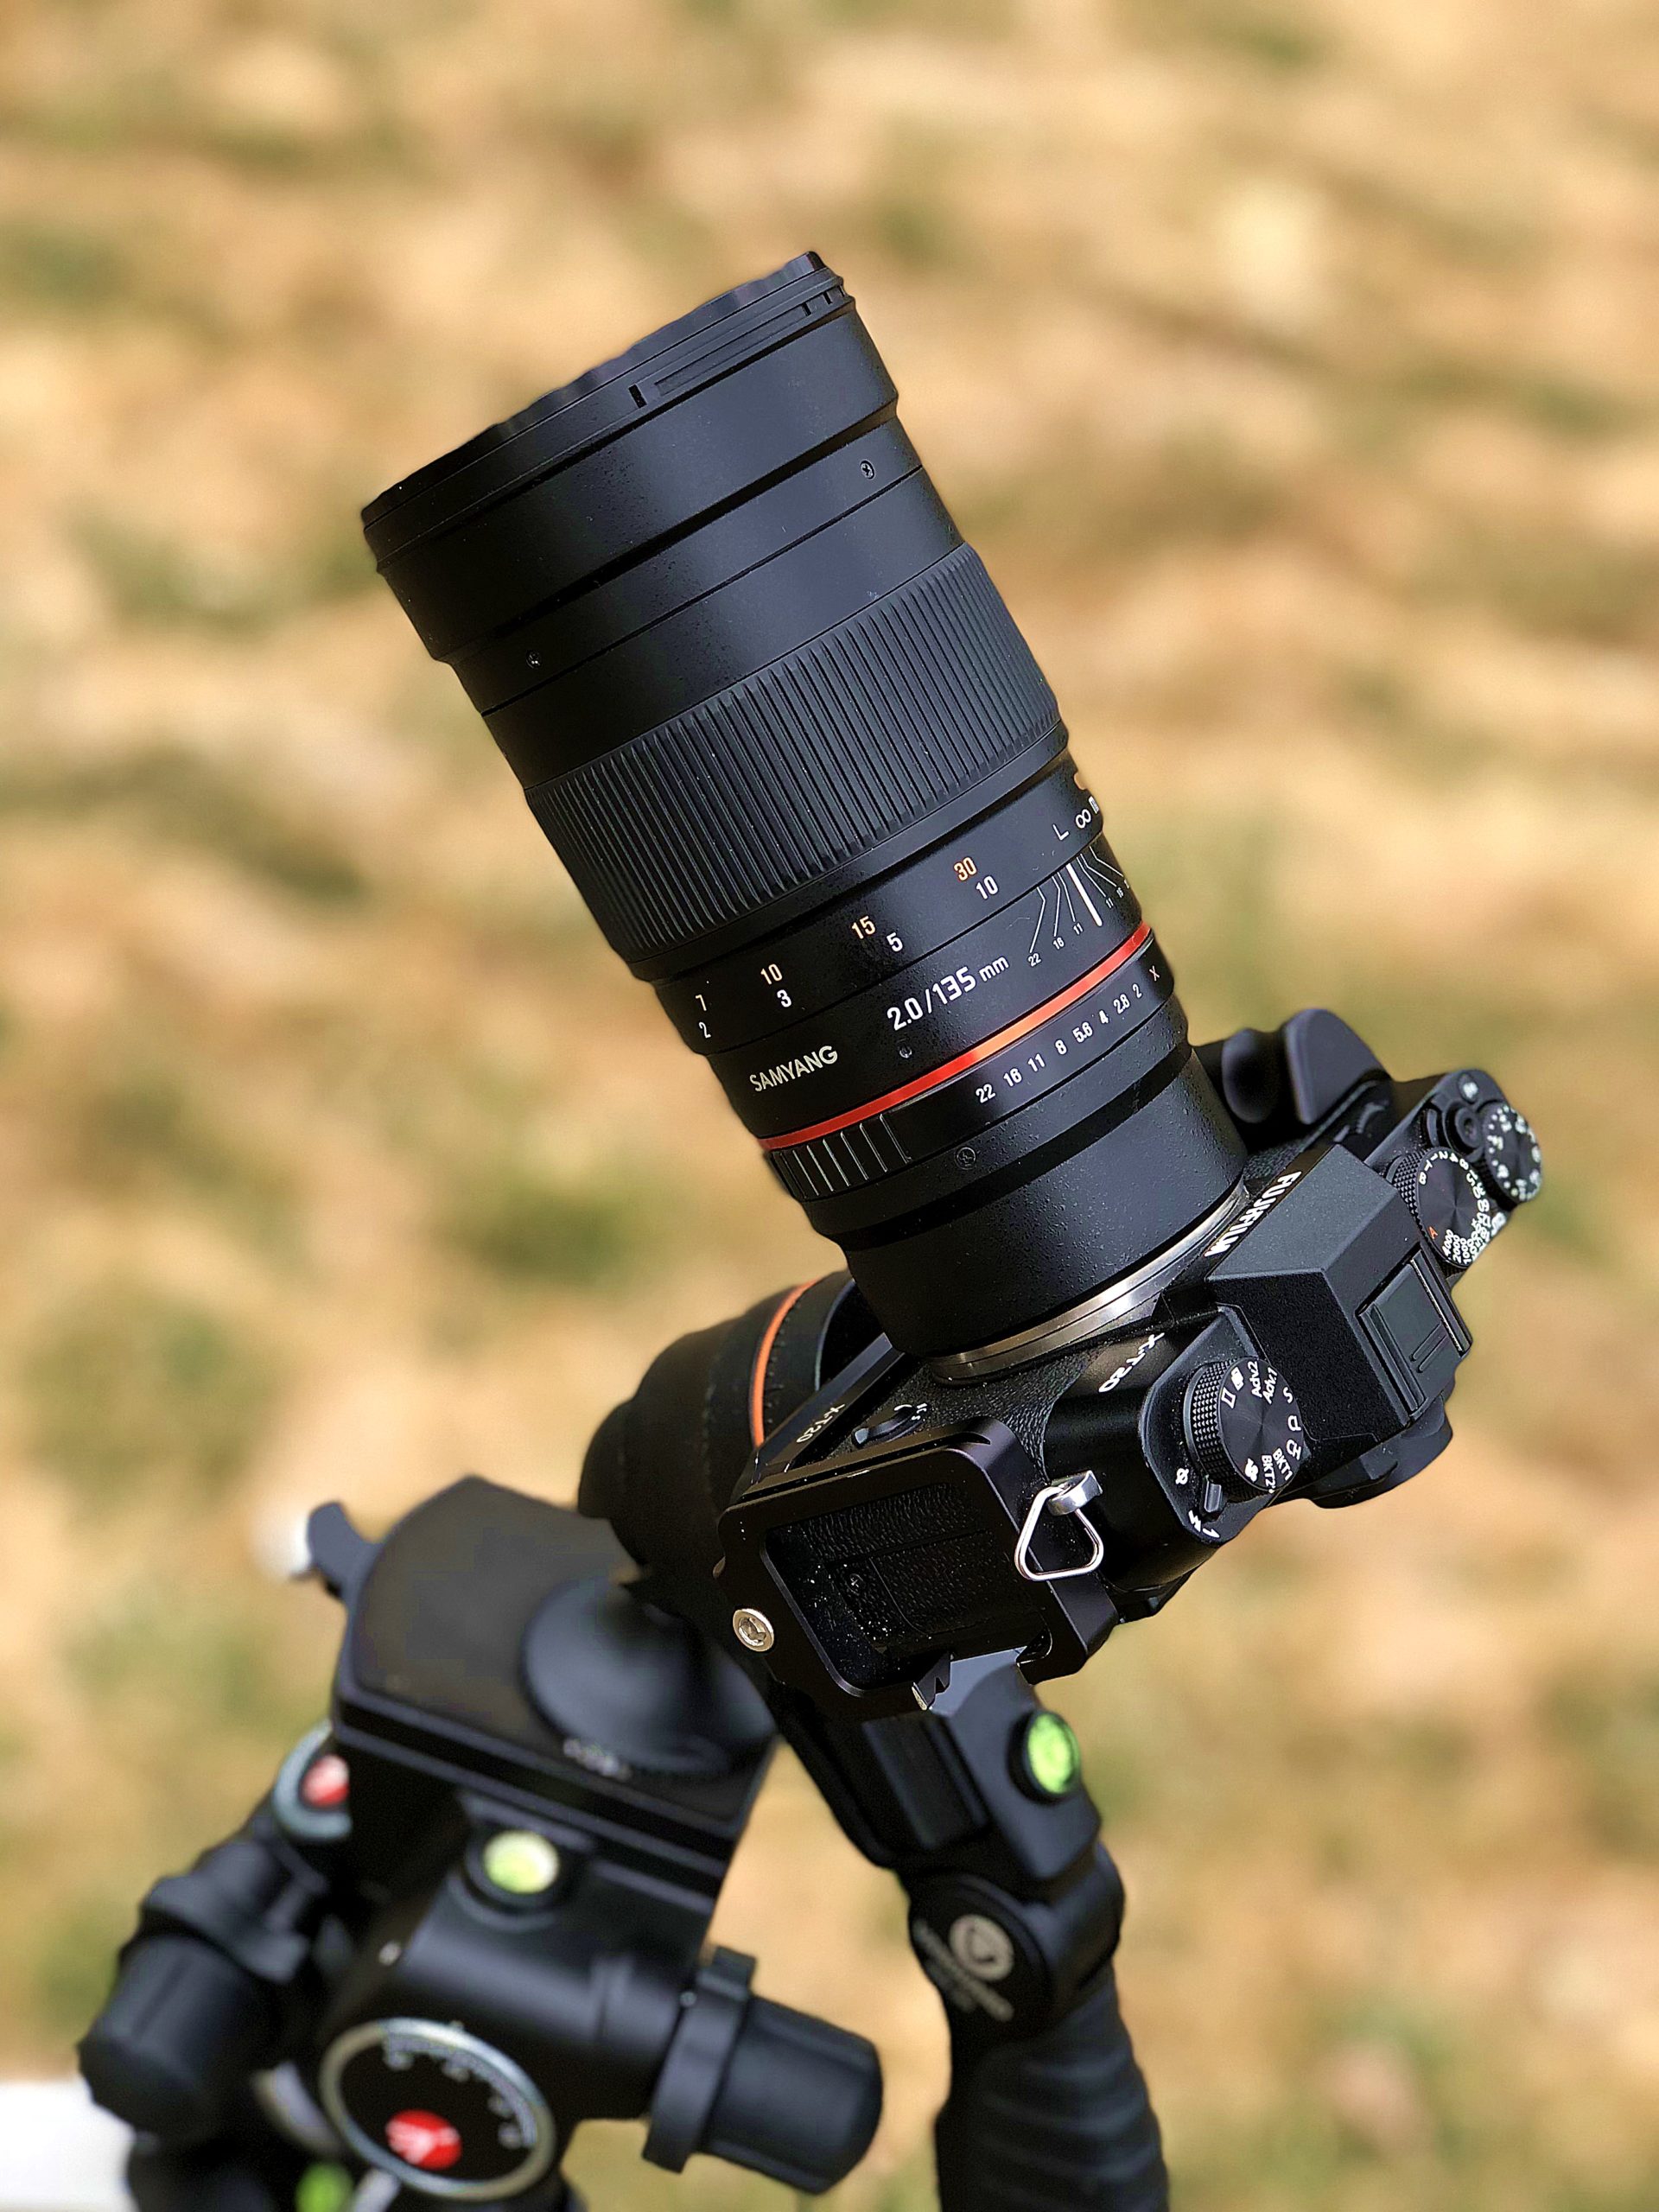 Samyang/Rokinon 135mm f/2 manual telephoto astrophotography lens mounted on Fuji X-T20 mirrorless camera